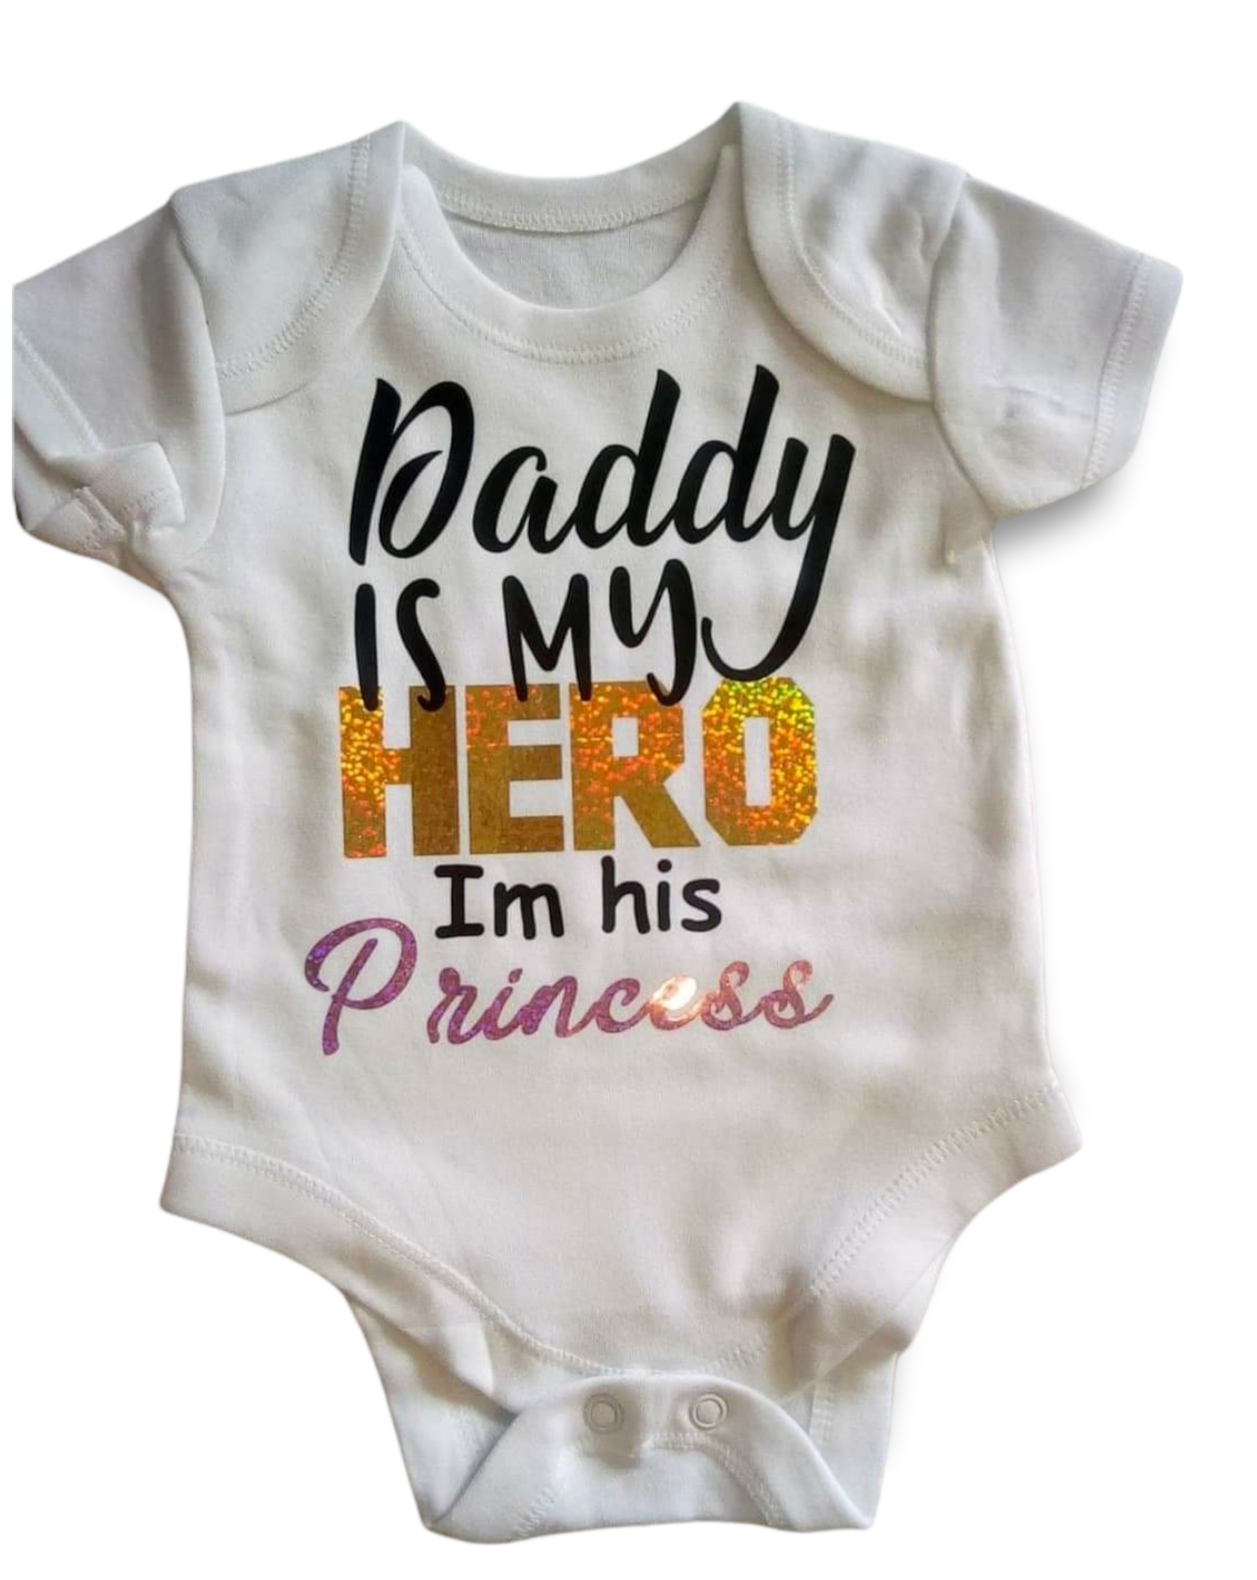 Daddy is my hero vest